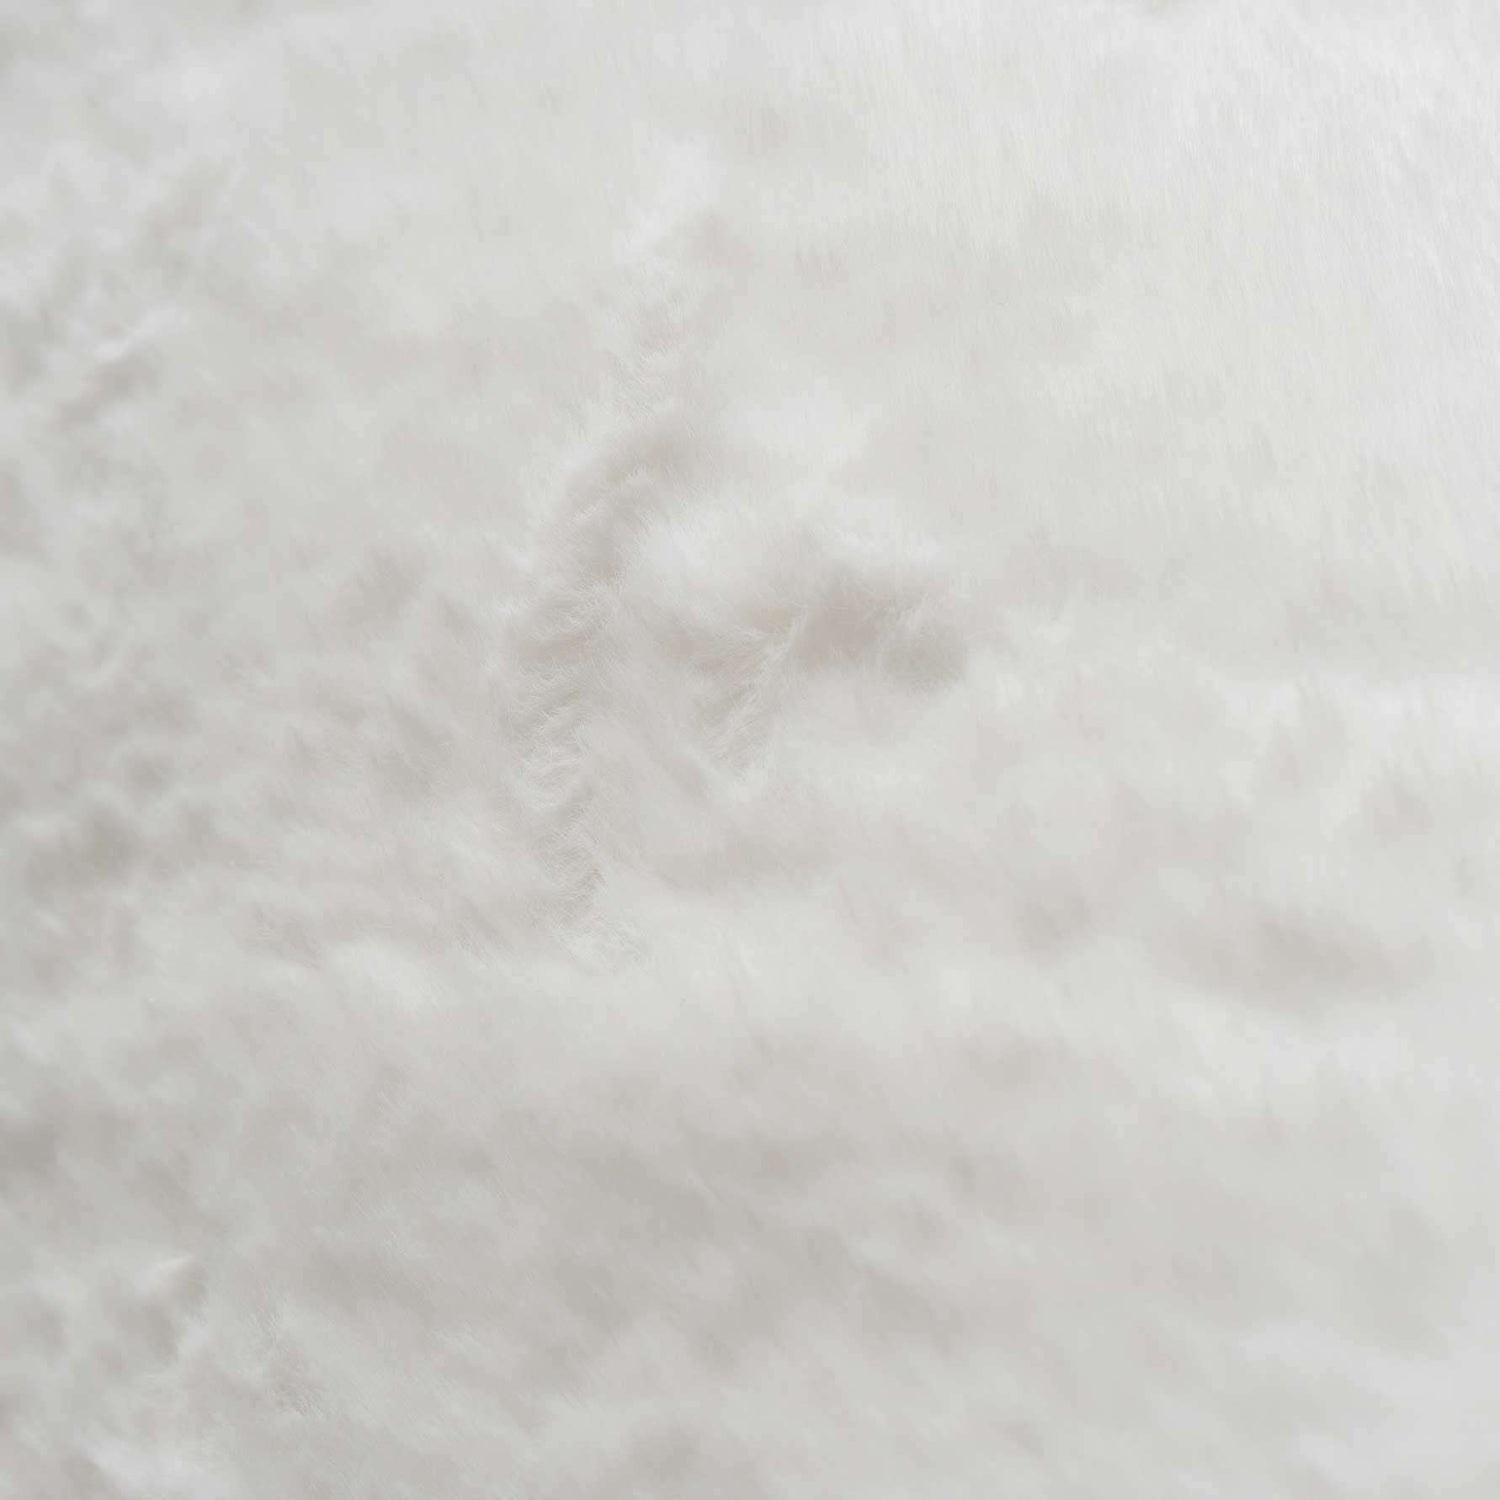 Super Soft White Faux Fur Runner Rug